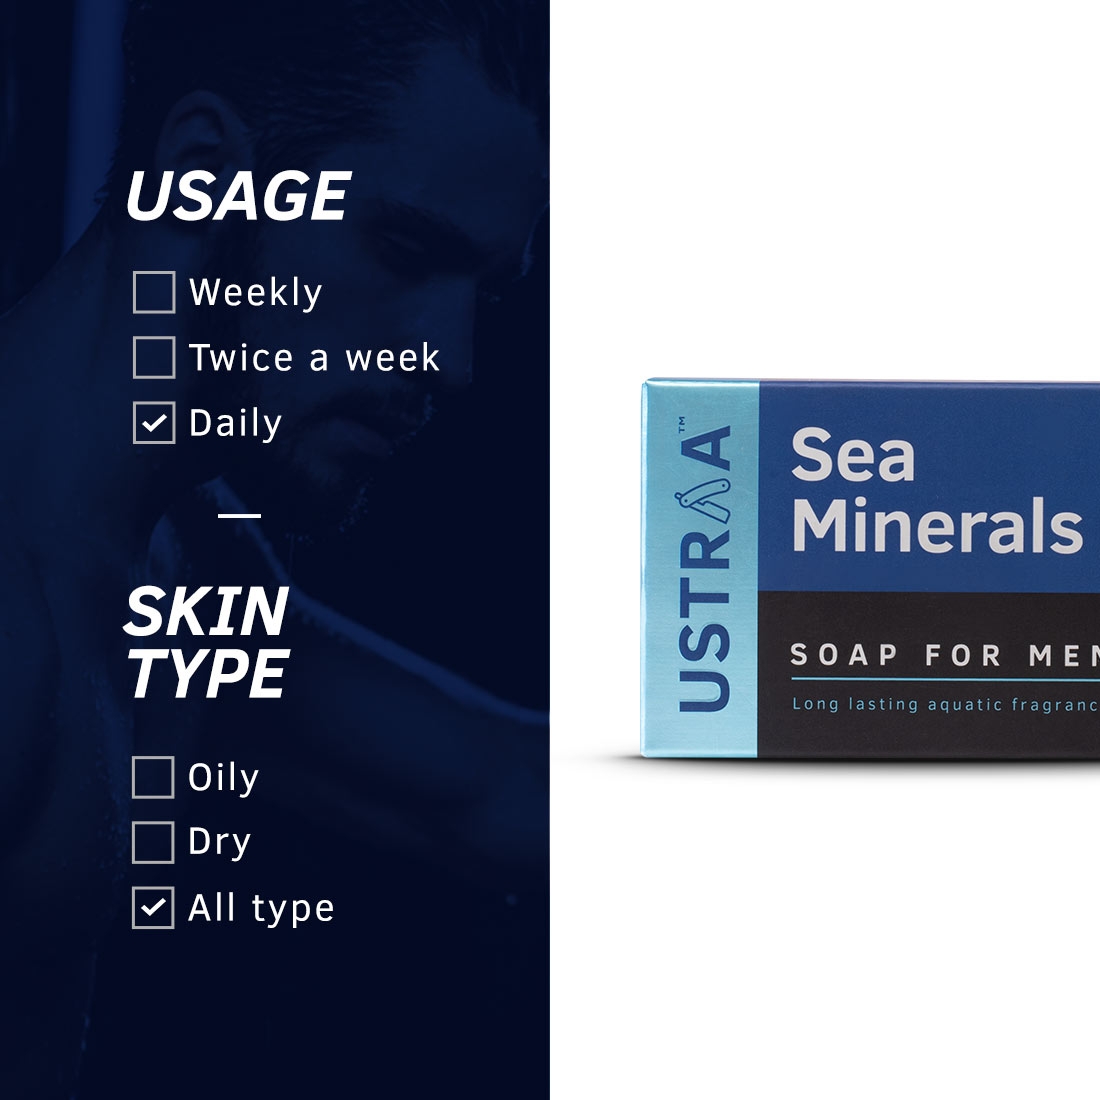 Ustraa Blue Deodorant - 150 ml & Sea Minerals Soap - 100g (Pack Of 4)